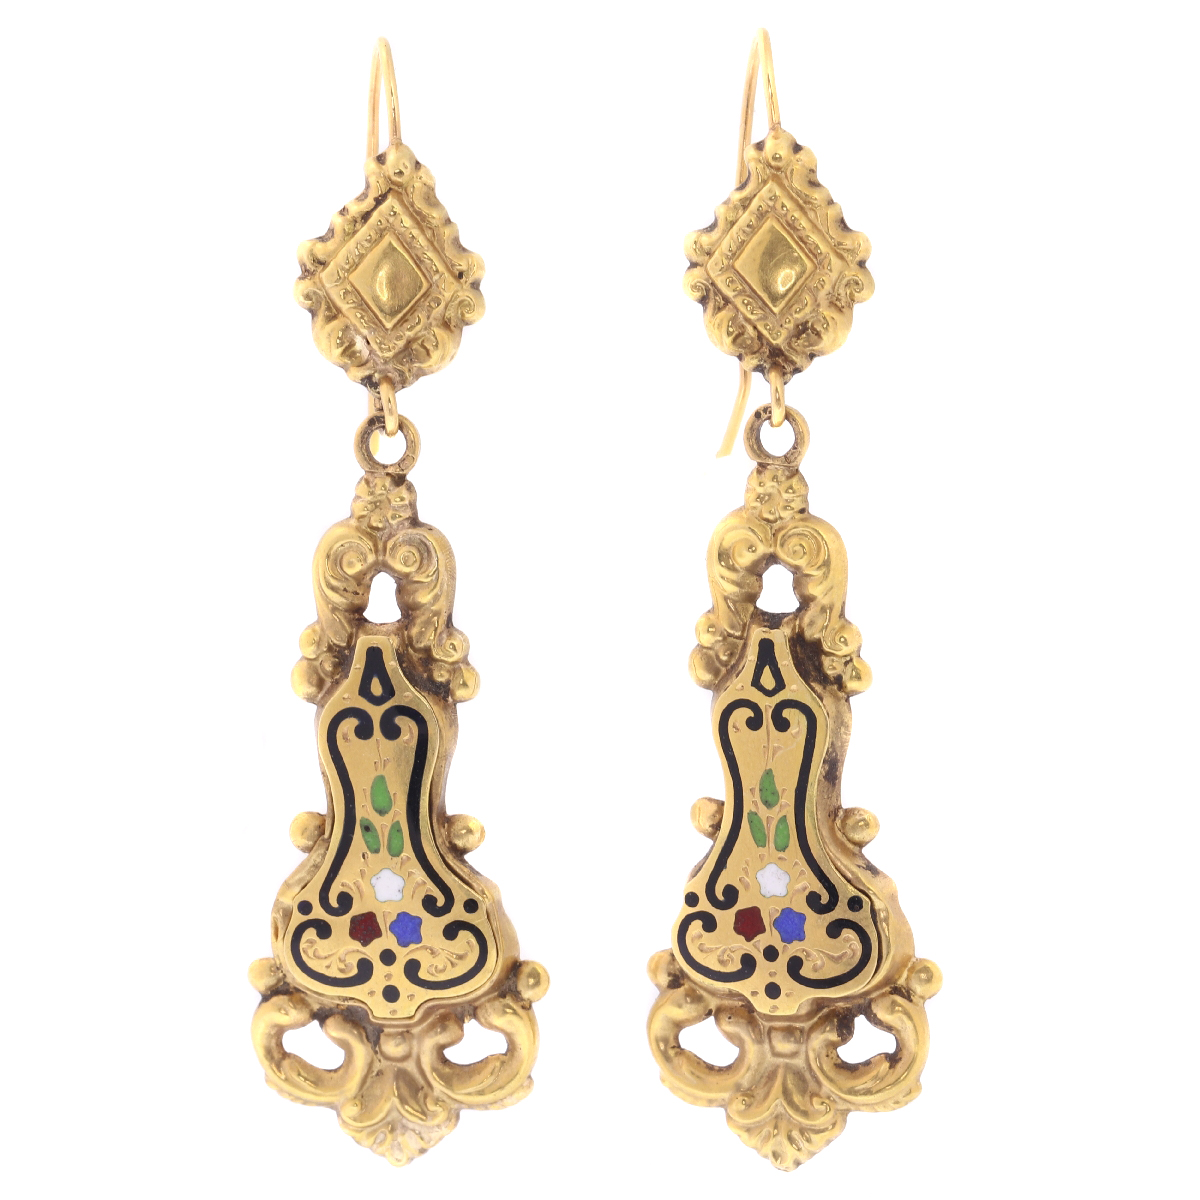 Antique floral enamel dangle earrings yellow gold, Victorian era